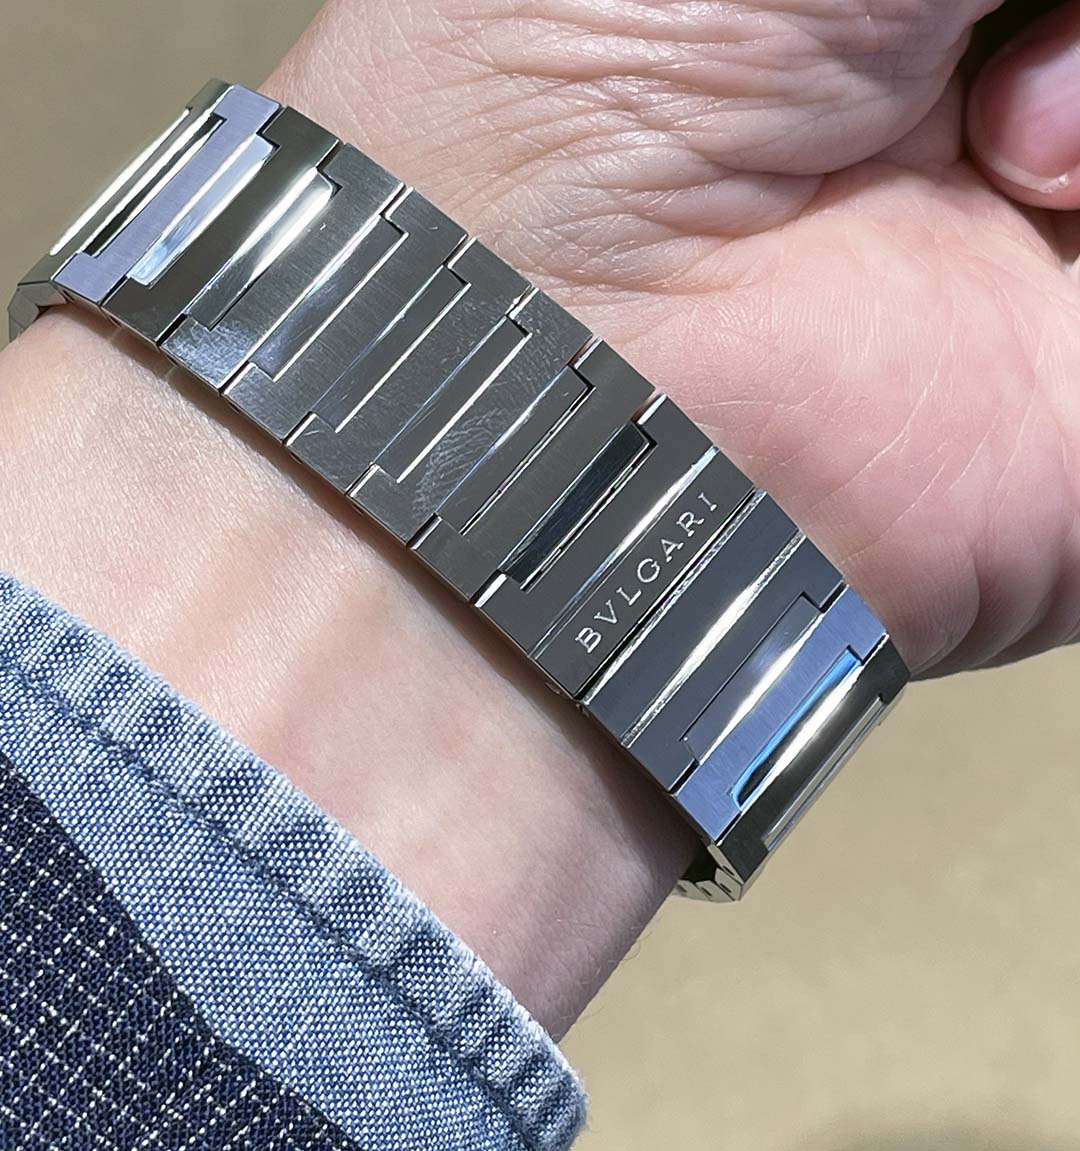 Octo Finissimo Chronograph GMT steel bracelet.